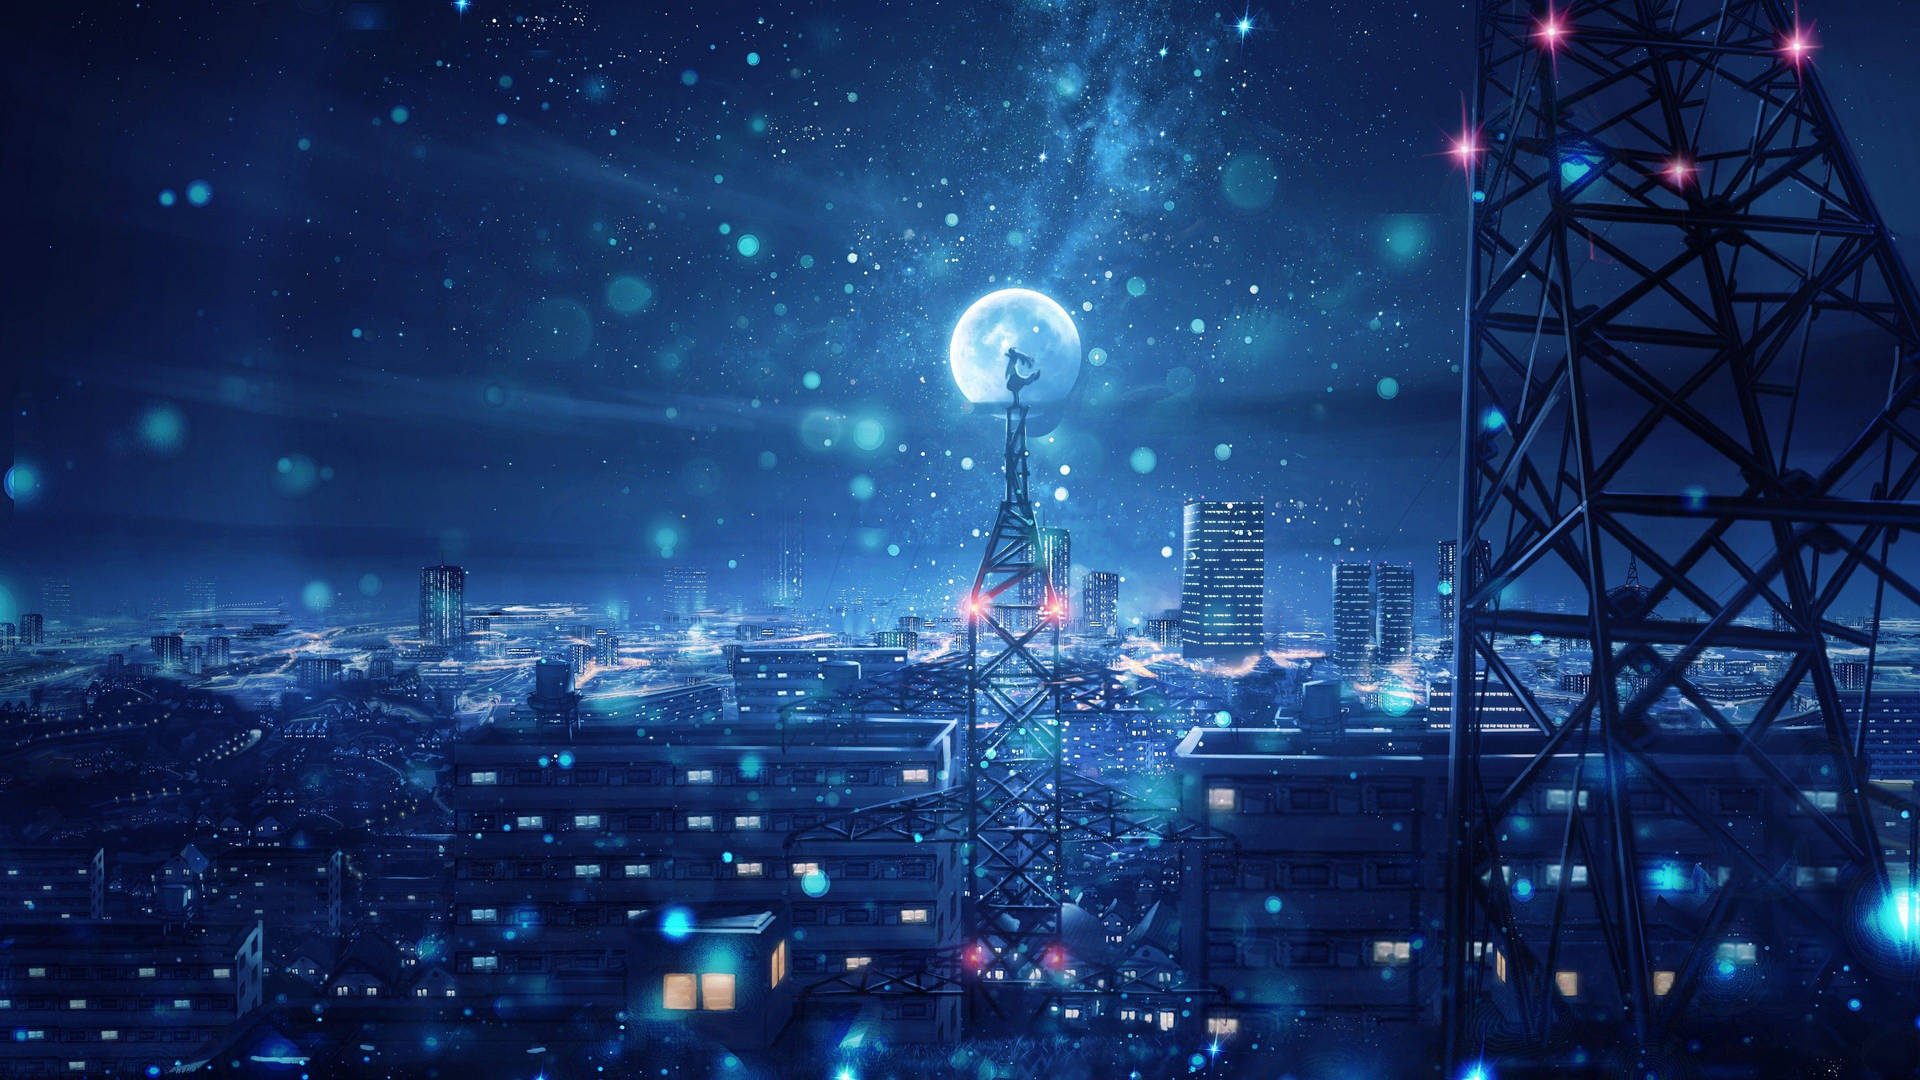 Anime Blue Night Cityscape Background